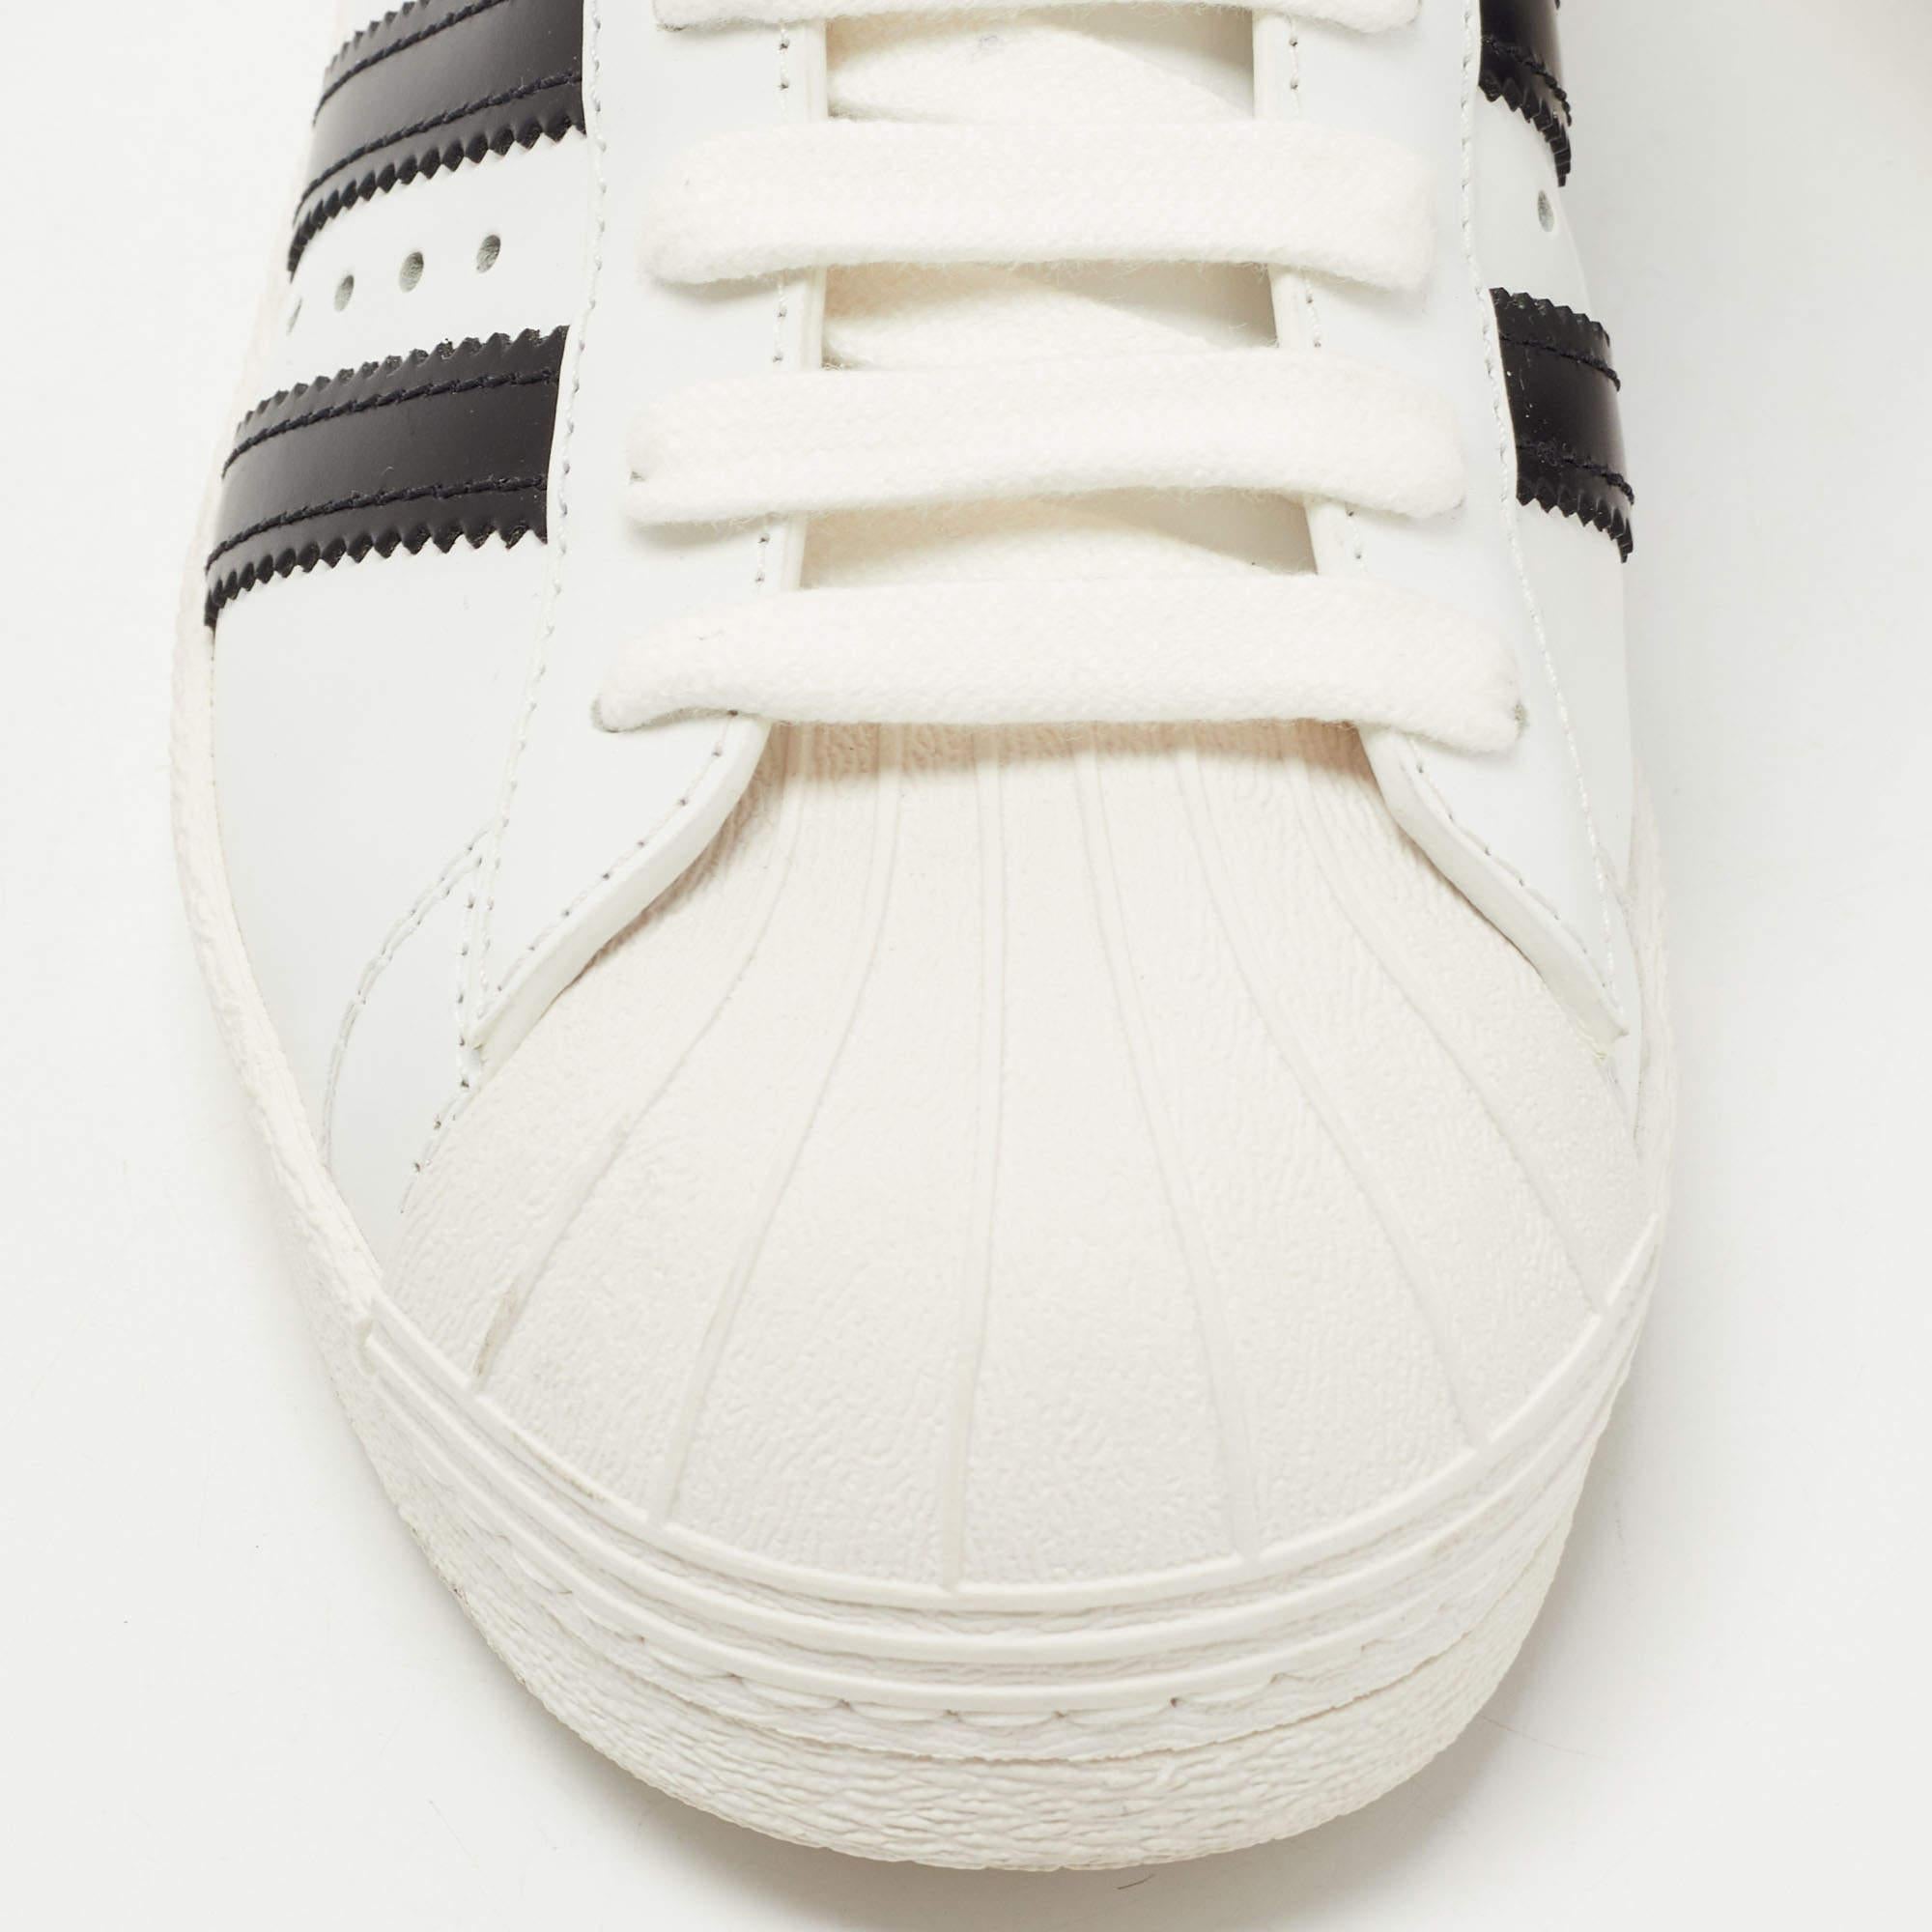 Prada x Adidas White/Black Leather Superstar Sneakers Size 37 1/3 3